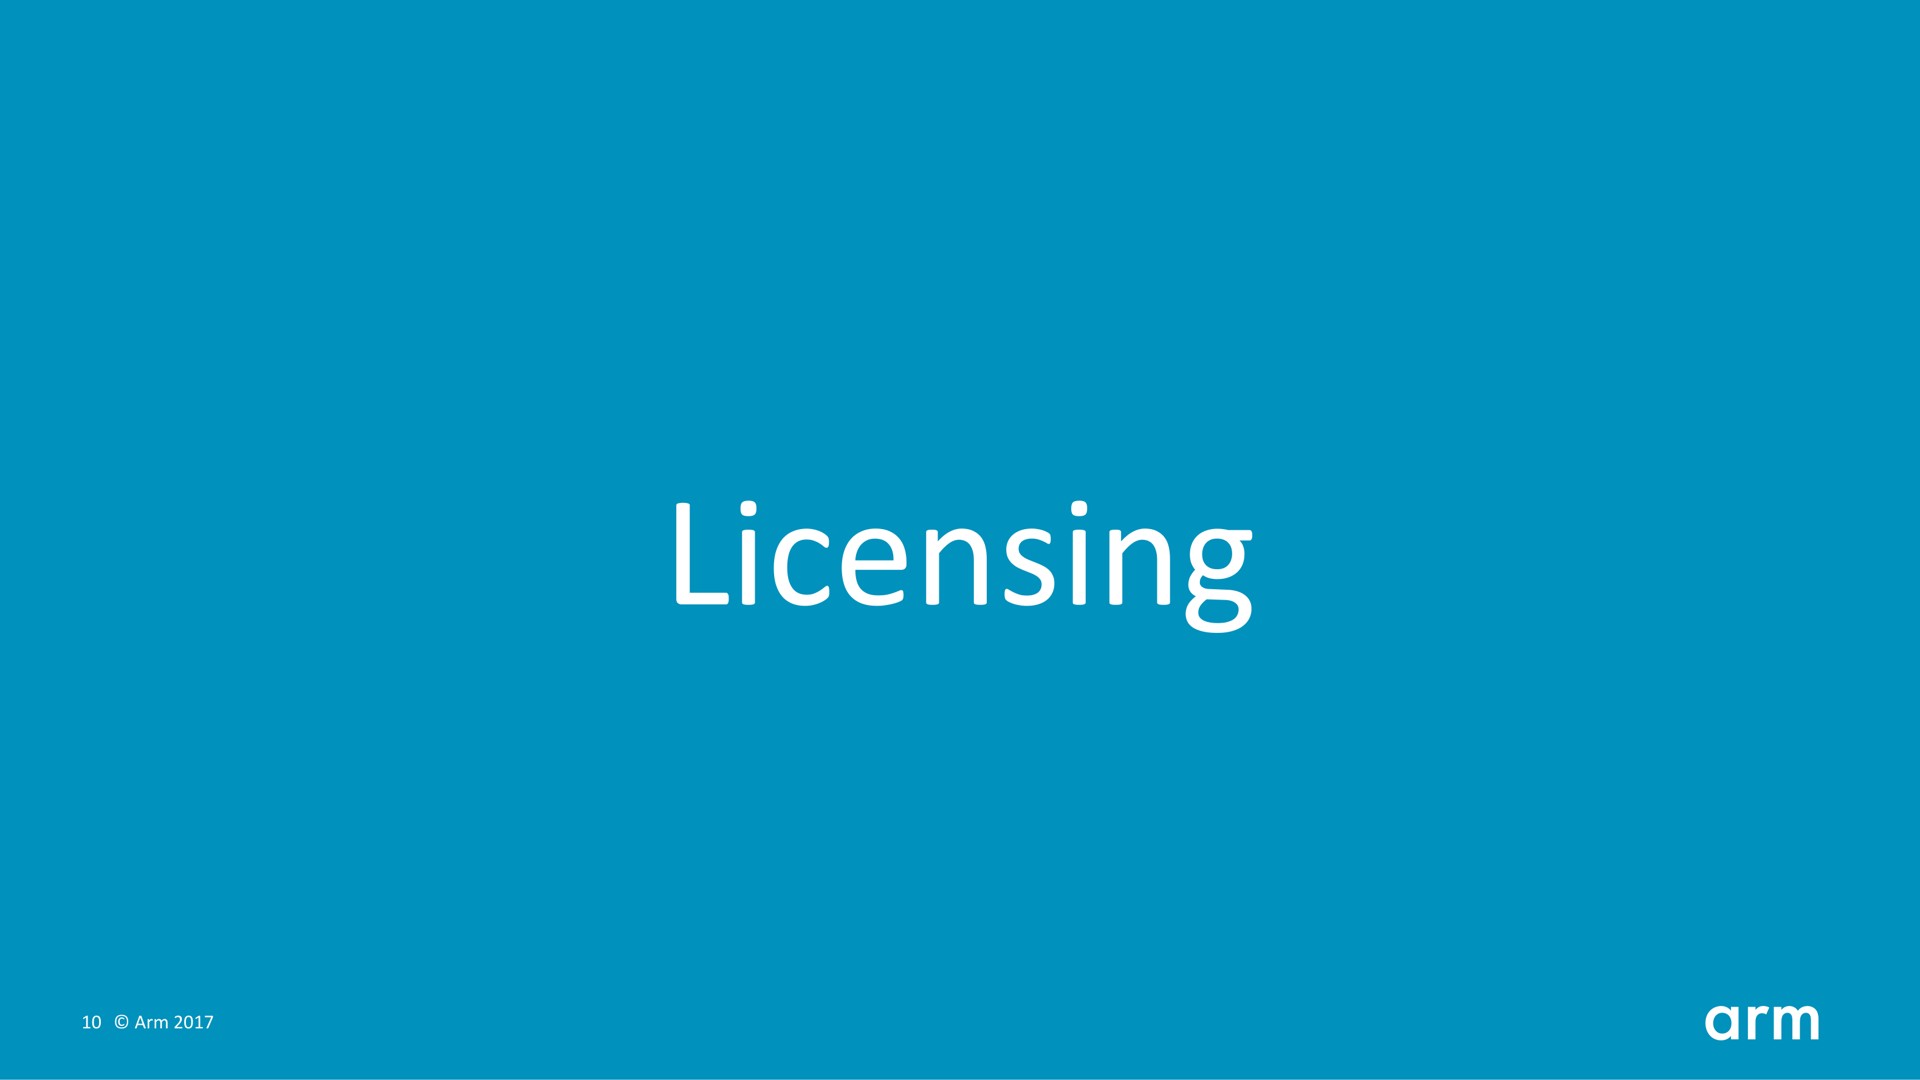 licensing | SoftBank